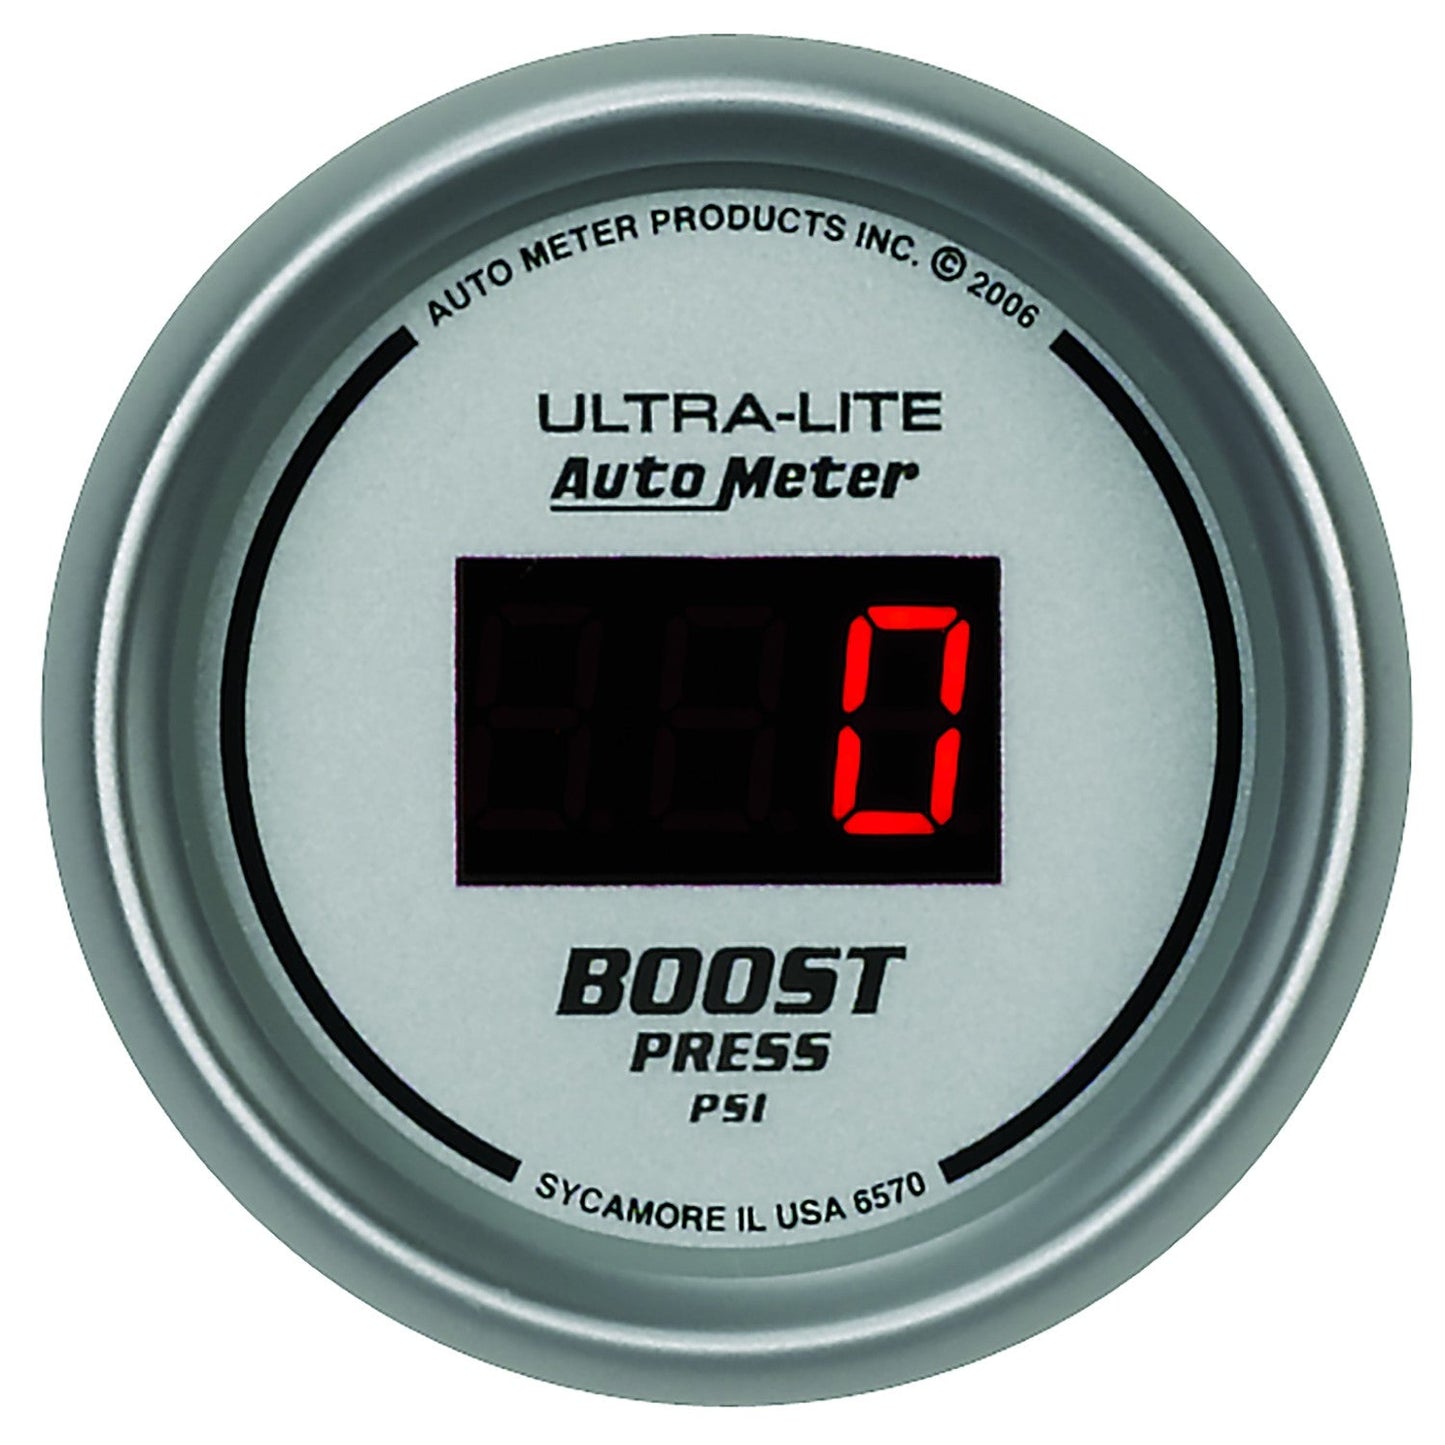 AutoMeter - 2-1/16" BOOST, 5-60 PSI, ULTRA-LITE DIGITAL (6570)